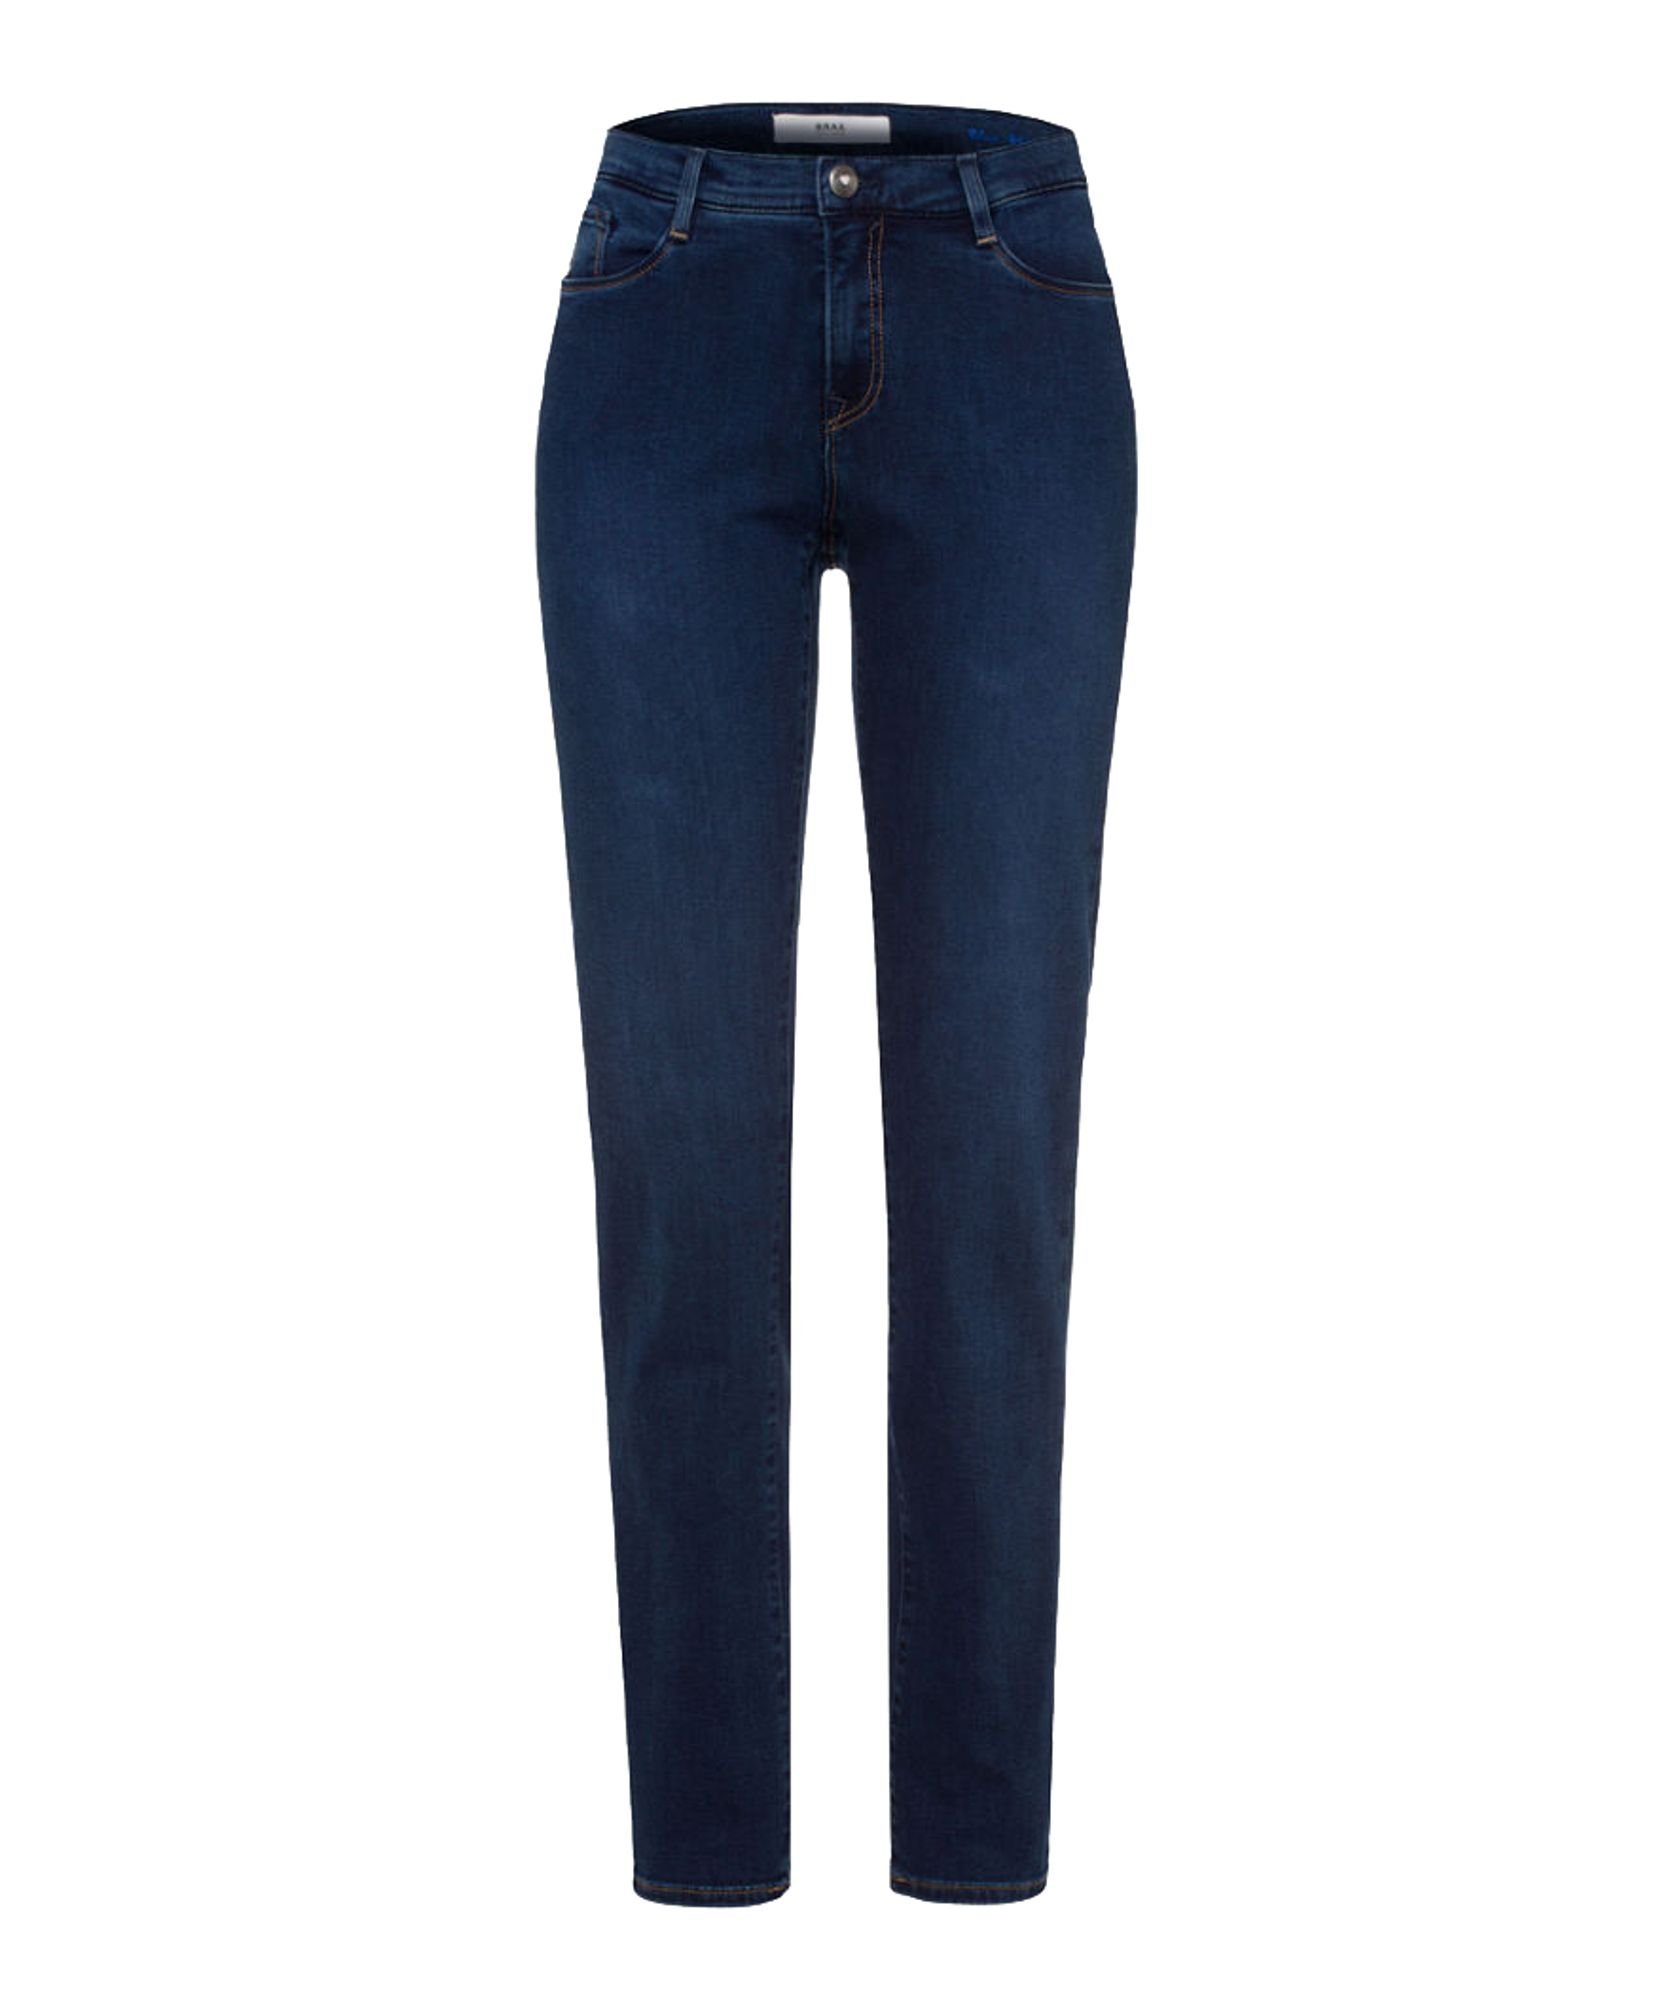 Beliebter Sonderpreis Brax 5-Pocket-Jeans 70-4000 REGULAR (25) BLUE USED SLIGHTLY